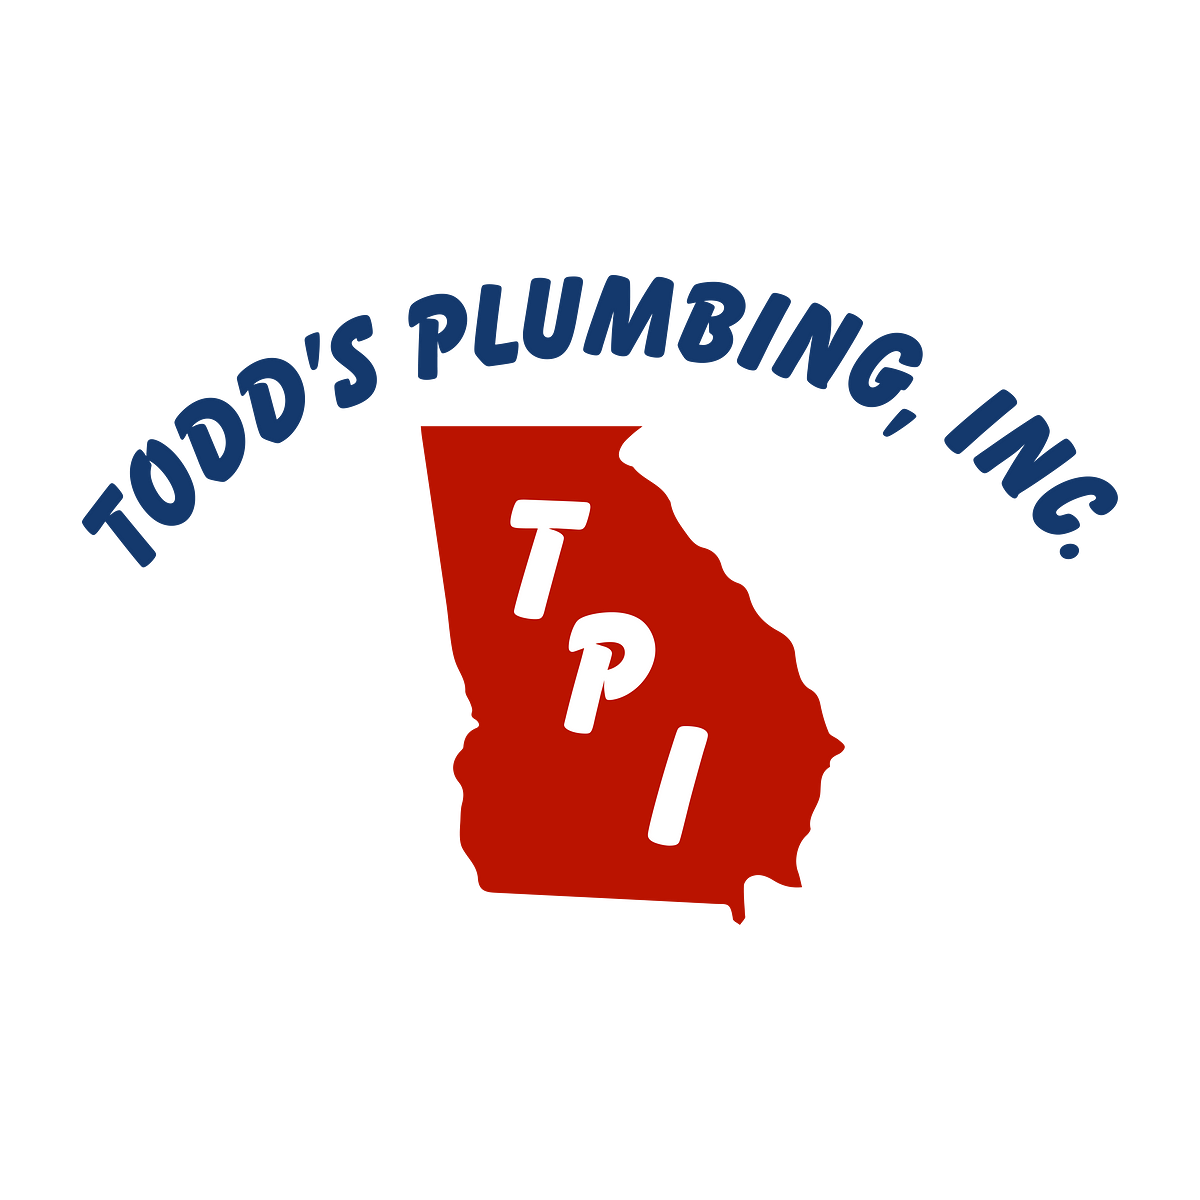 Todd's Plumbing Inc